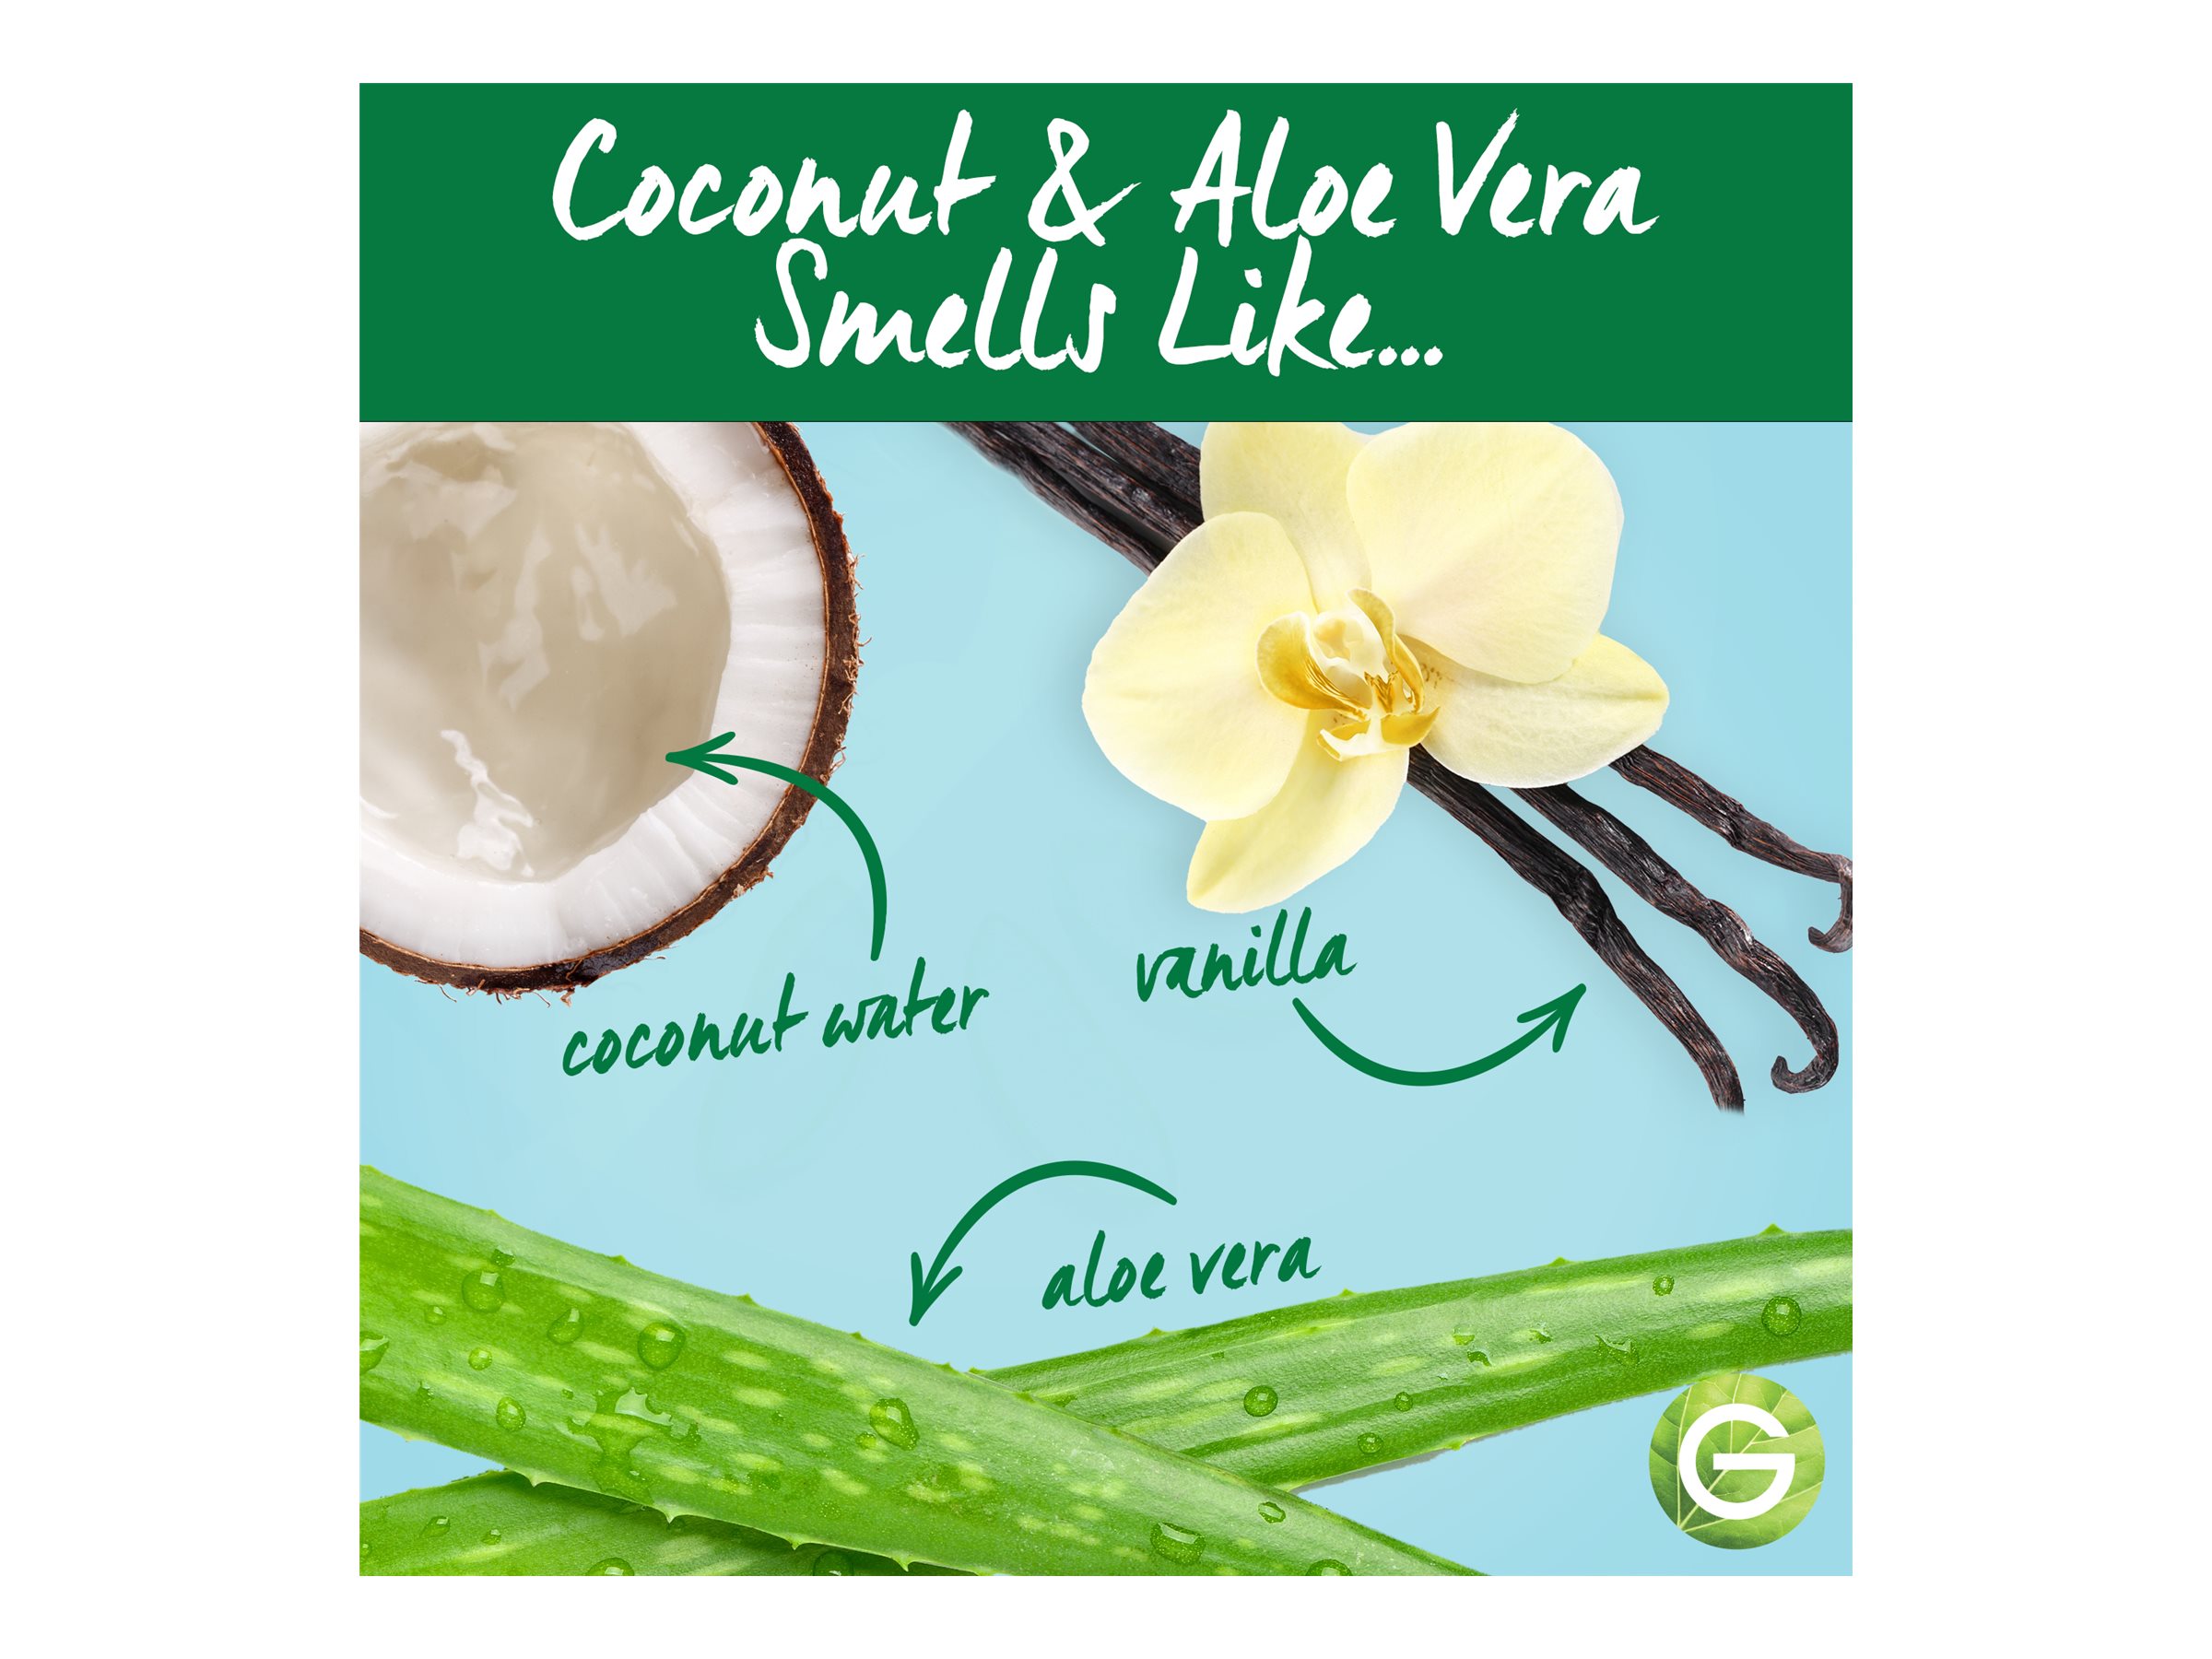 Garnier Whole Blends Shampoo Bar - Coconut and Organic Aloe Vera - 60g